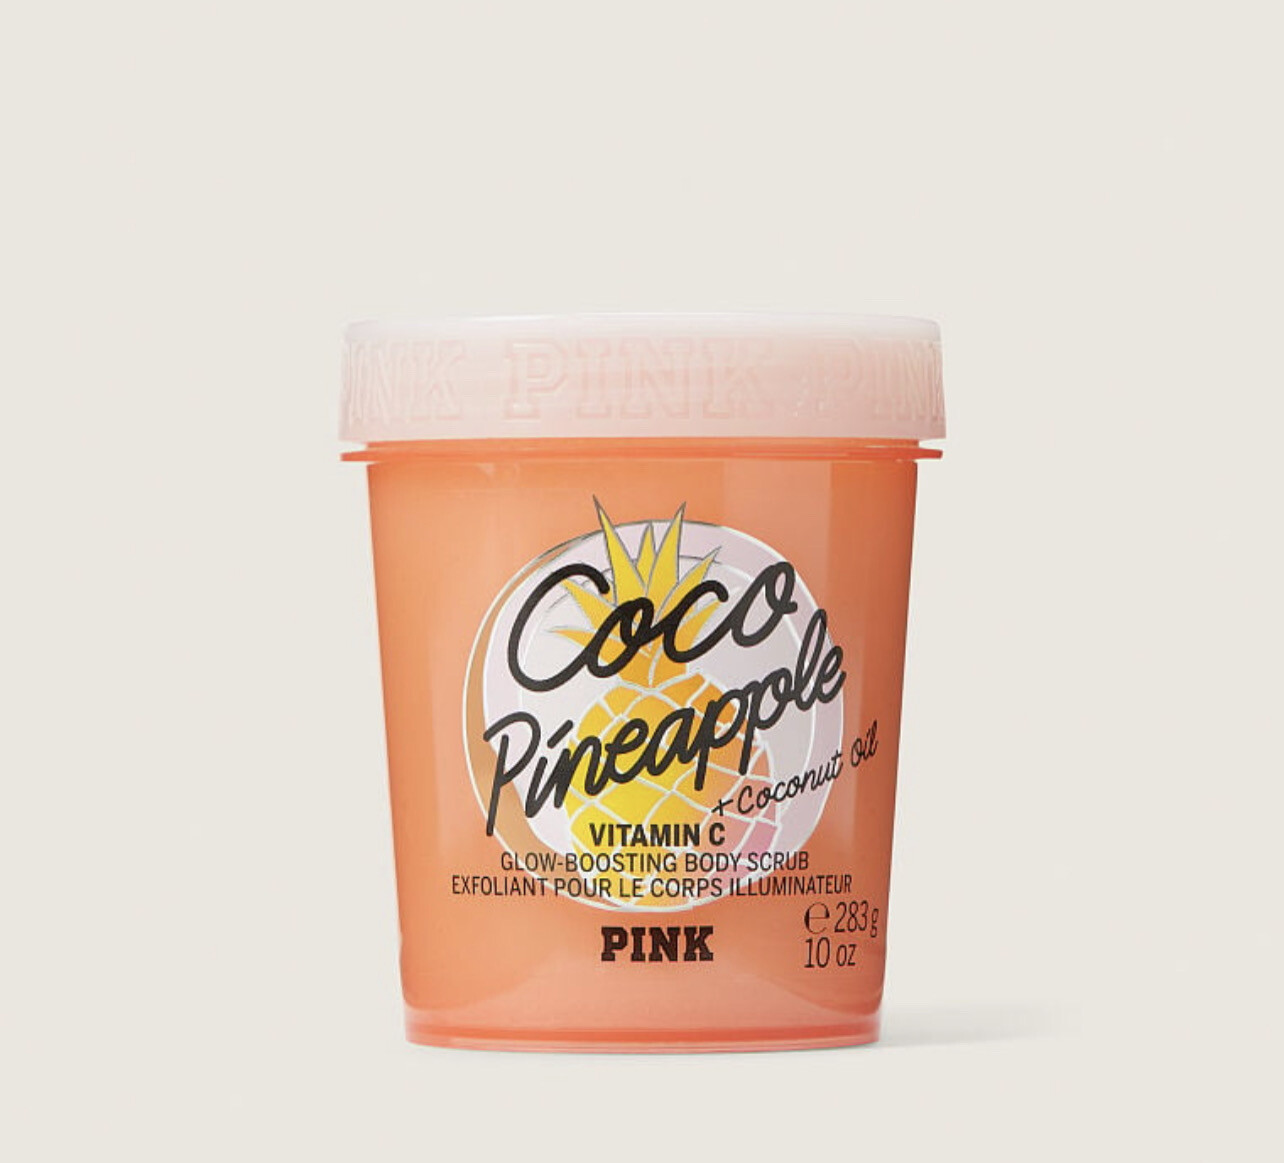 Victoria’s Secret - PINK Coco Pineapple Glow-Boosting Body Scrub with Vitamin C